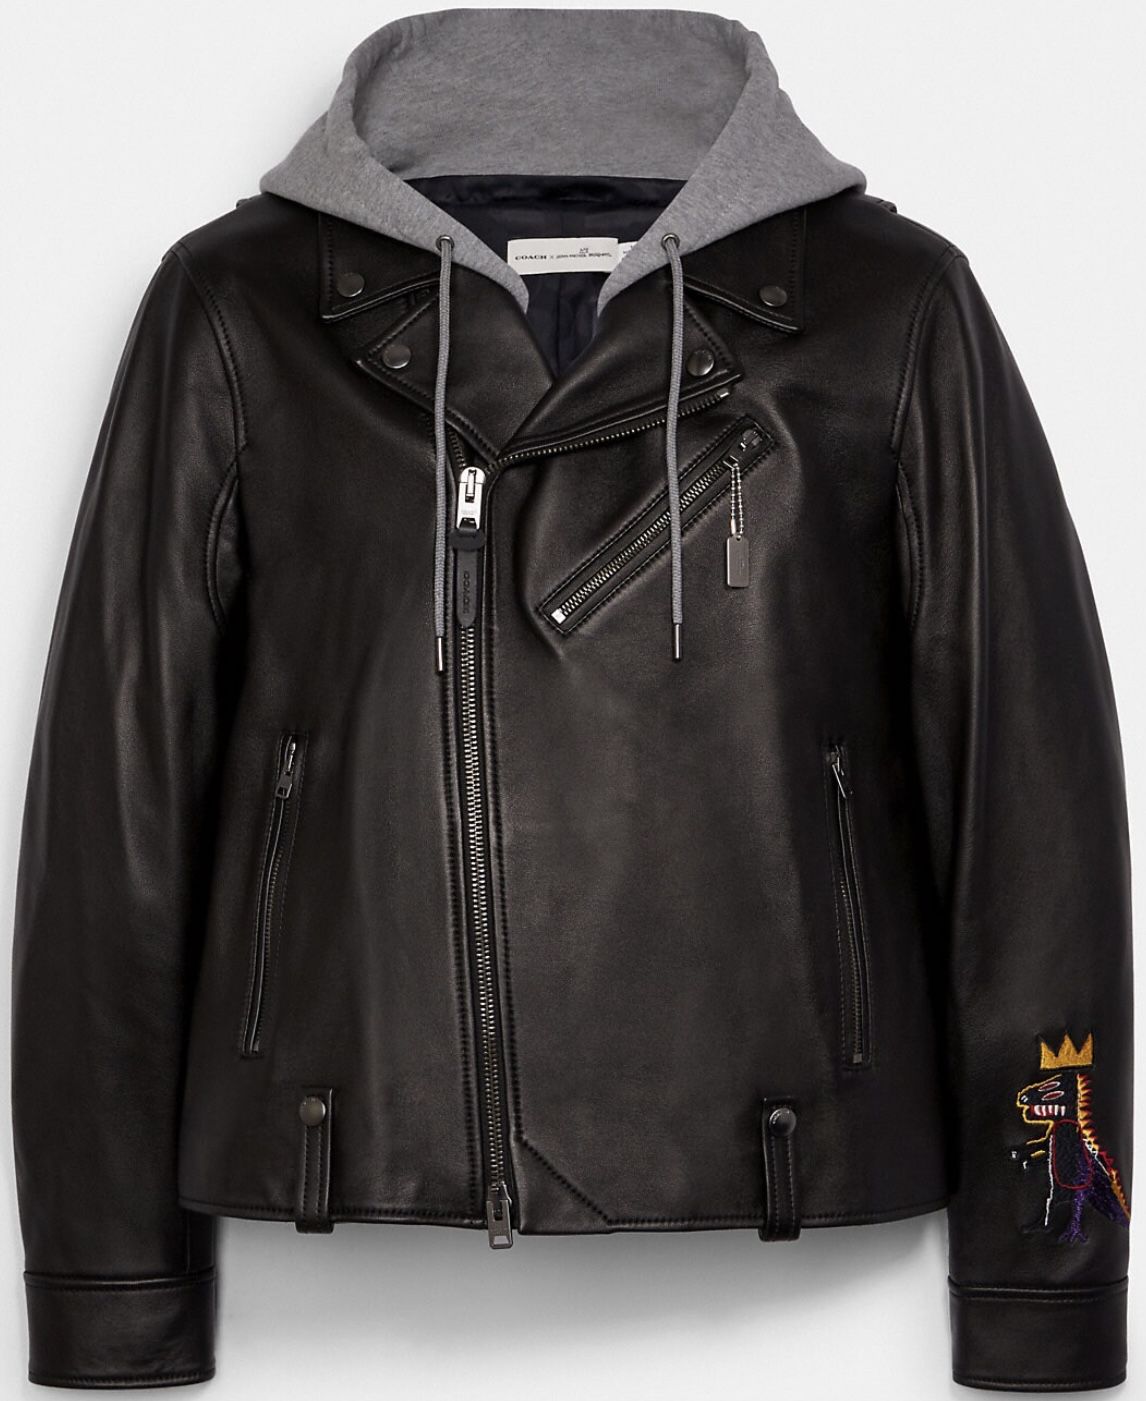 Coach X Jean Michel Basquiat Leather Jacket w/Removable Hood Retail $1,298